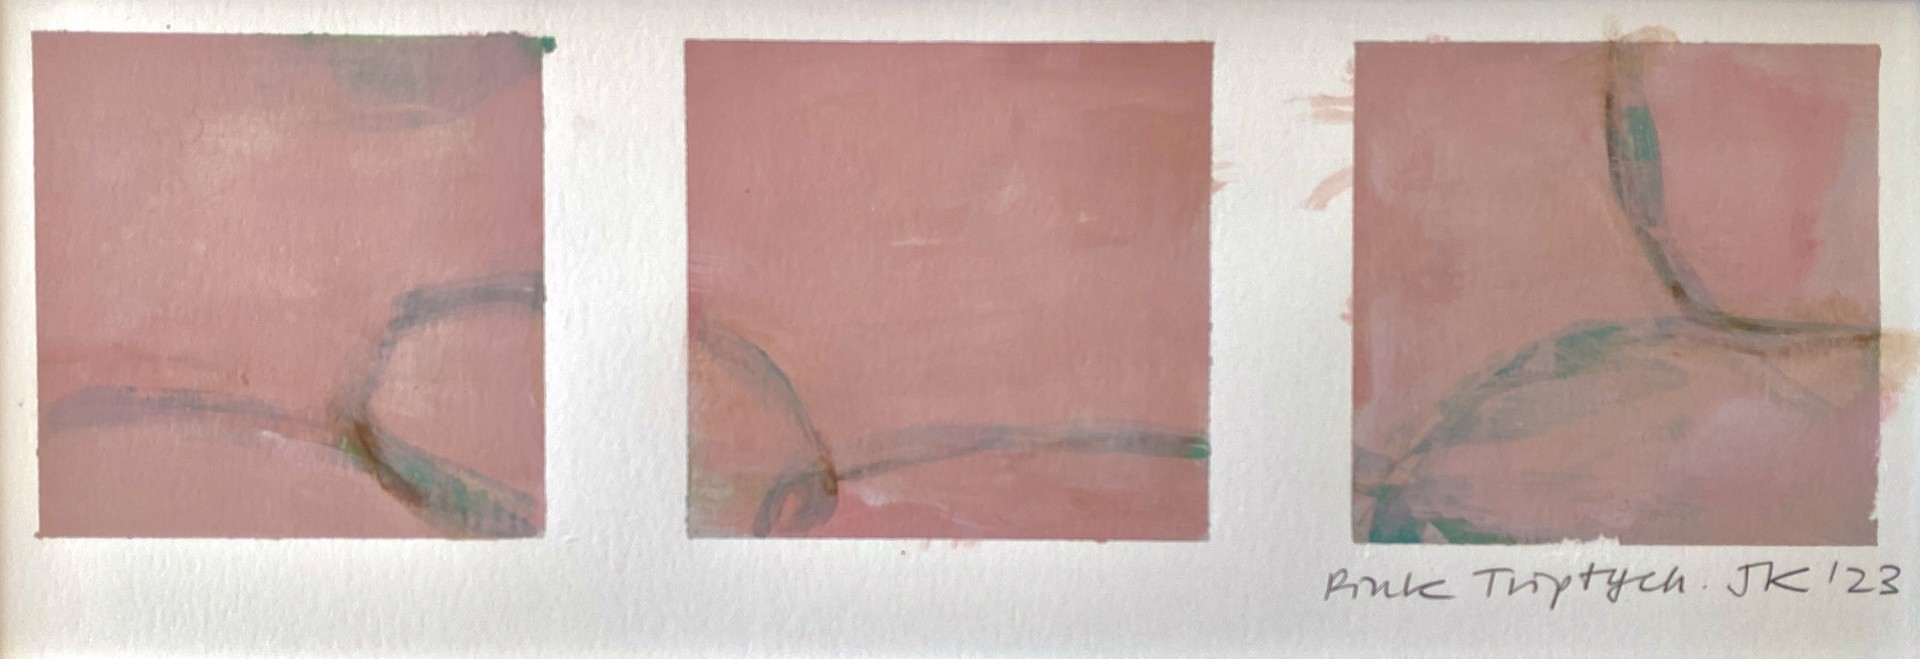 Pink Triptych Study by Jane Kell